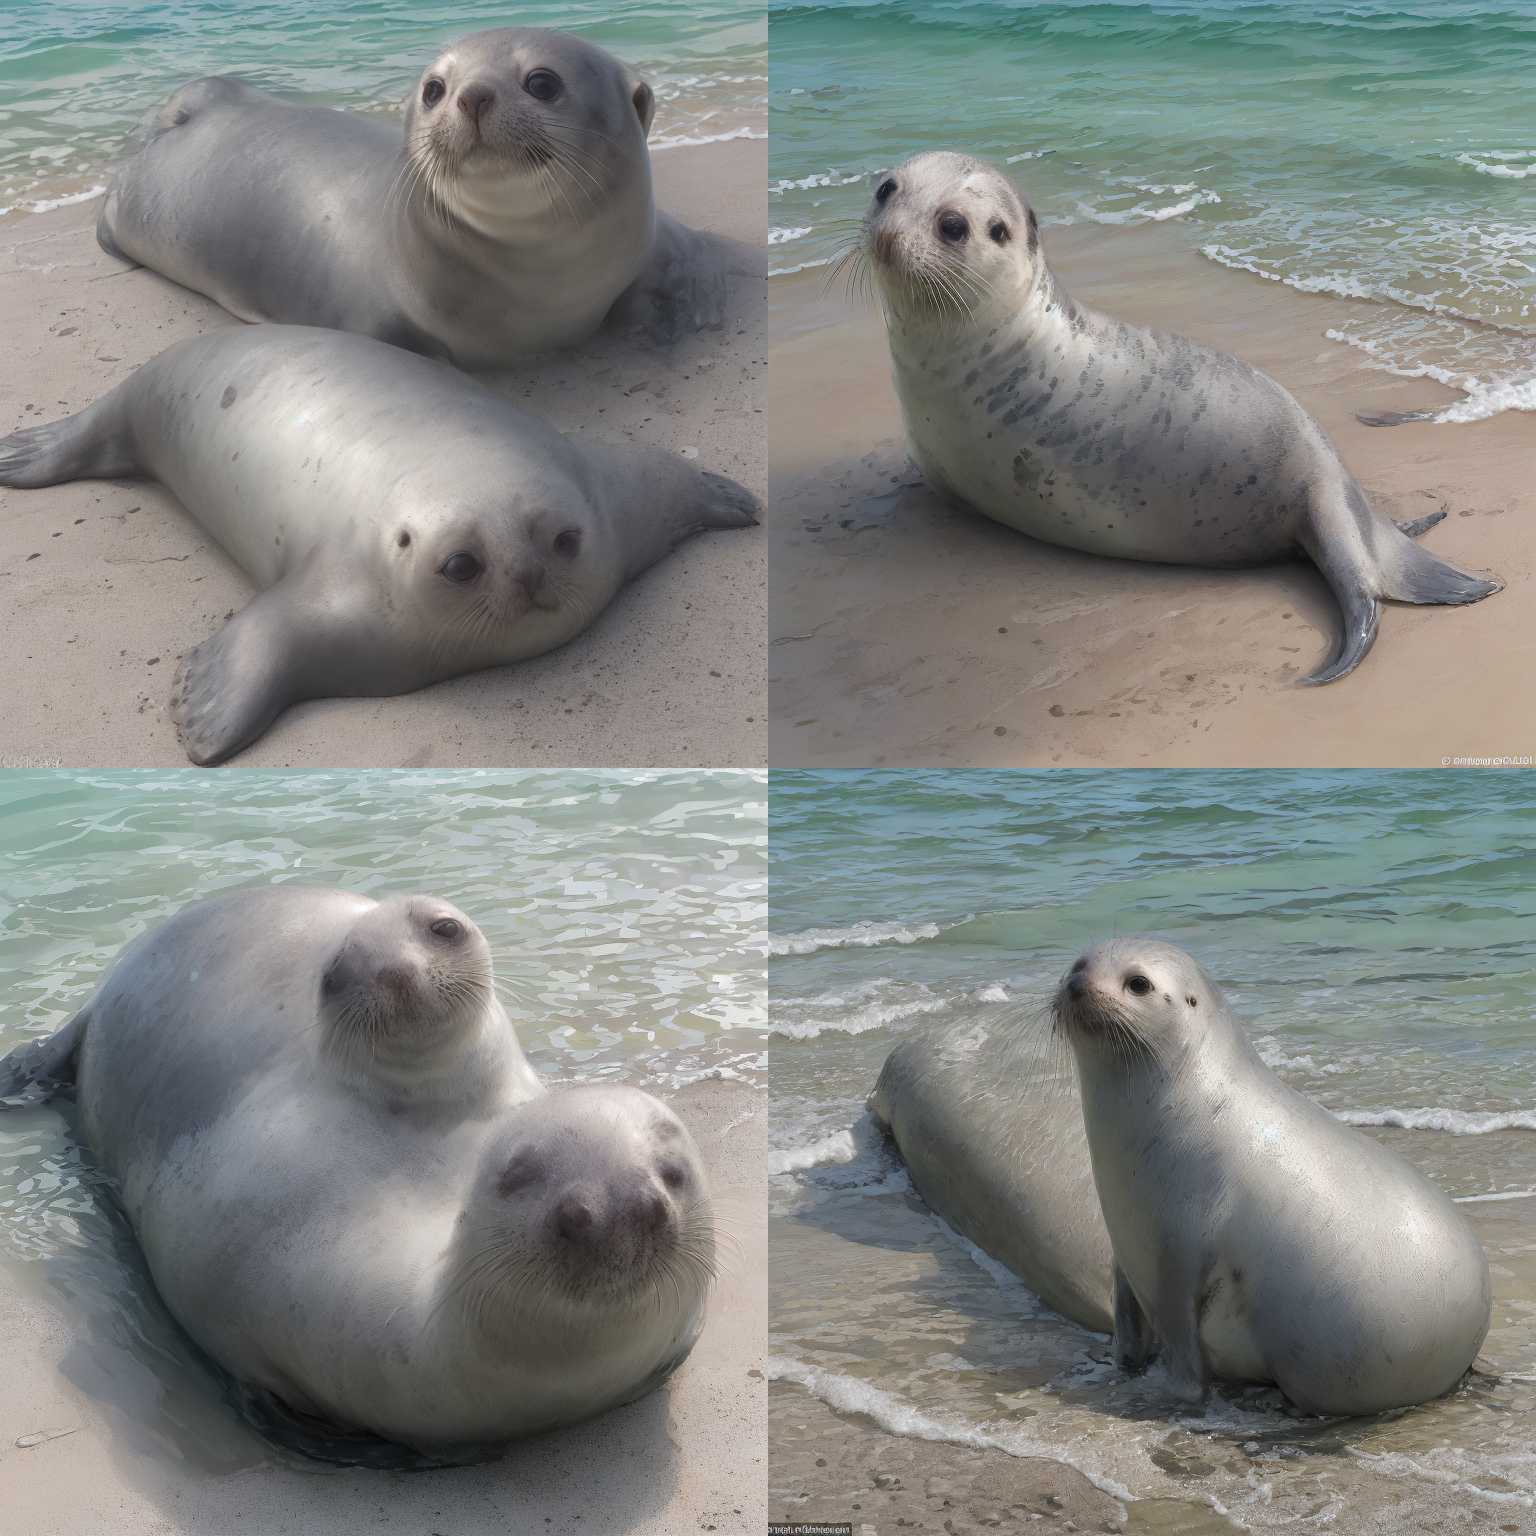 A sunbathing seal